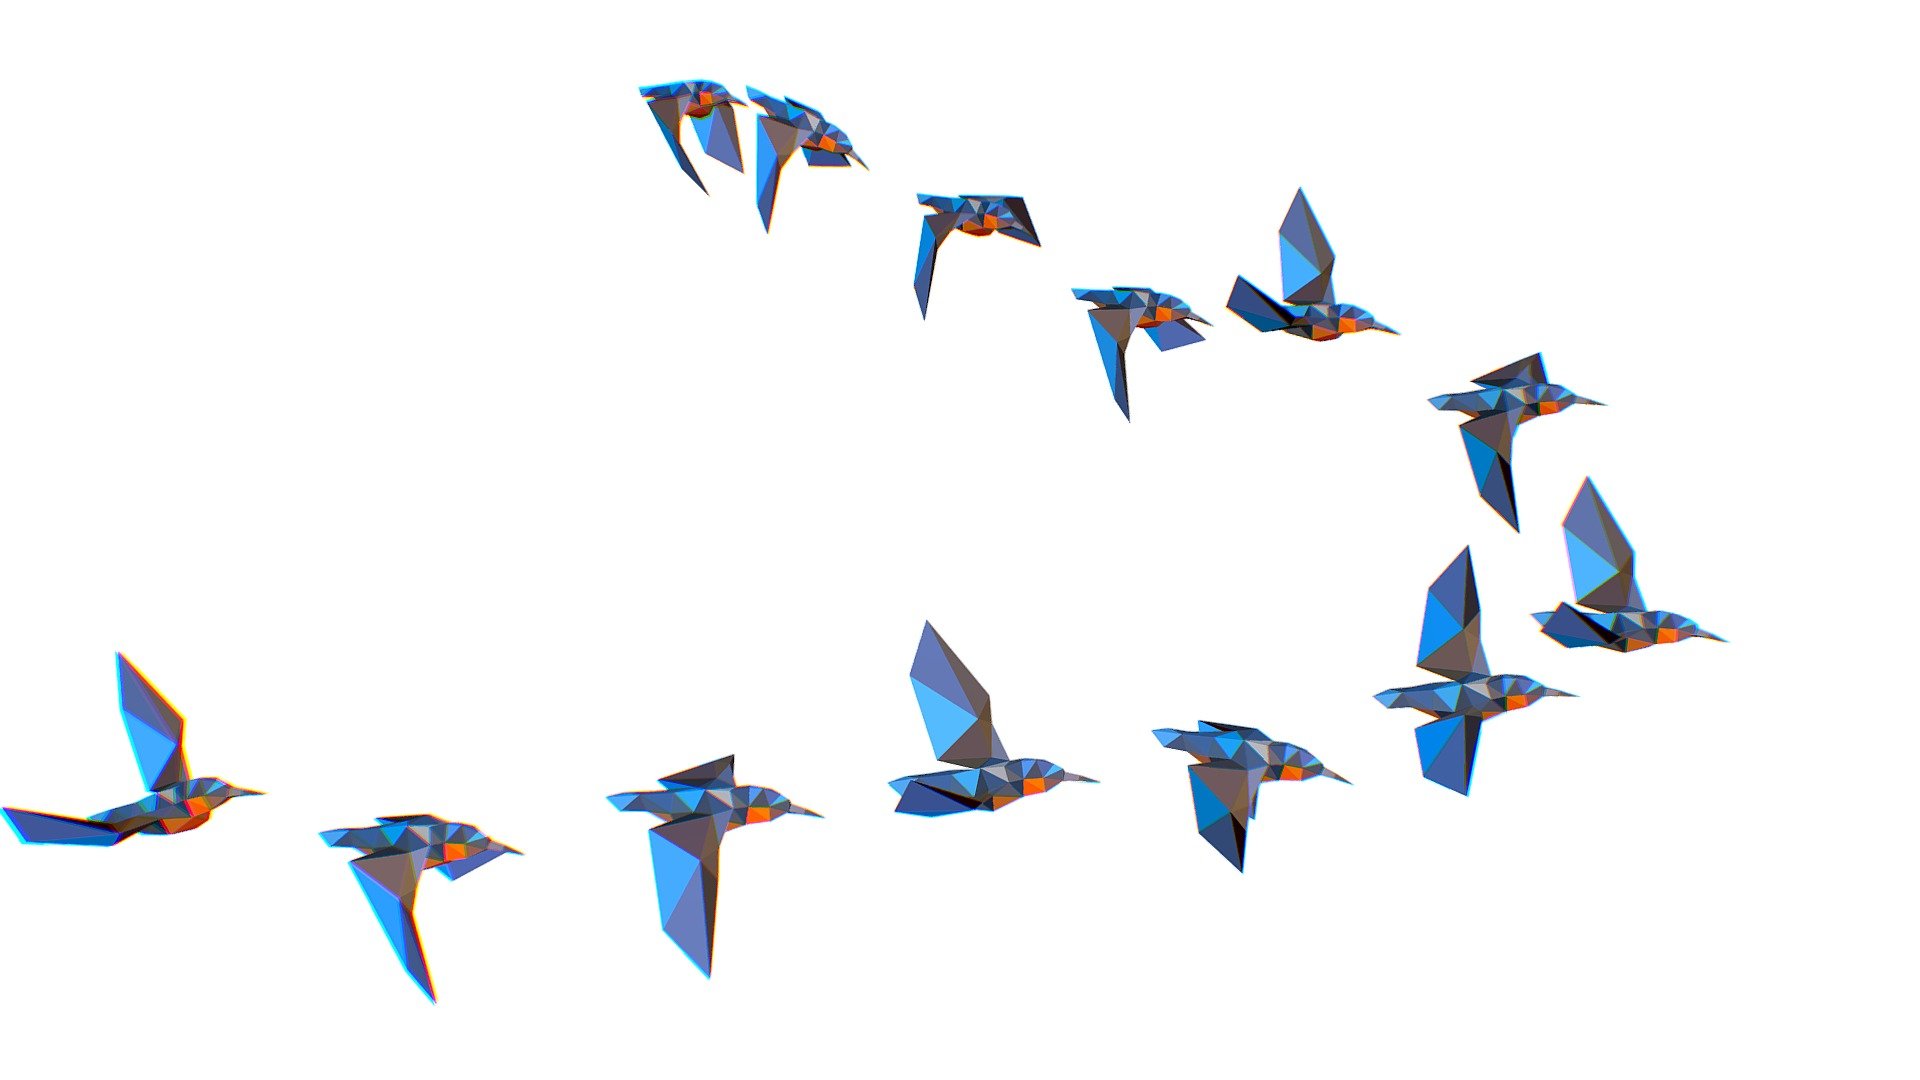 Support me on Patreon, please - https://www.patreon.com/art_book

animated flock birds lowpoly art style - animated flock birds lowpoly art style - Buy Royalty Free 3D model by Oleg Shuldiakov (@olegshuldiakov) 3d model